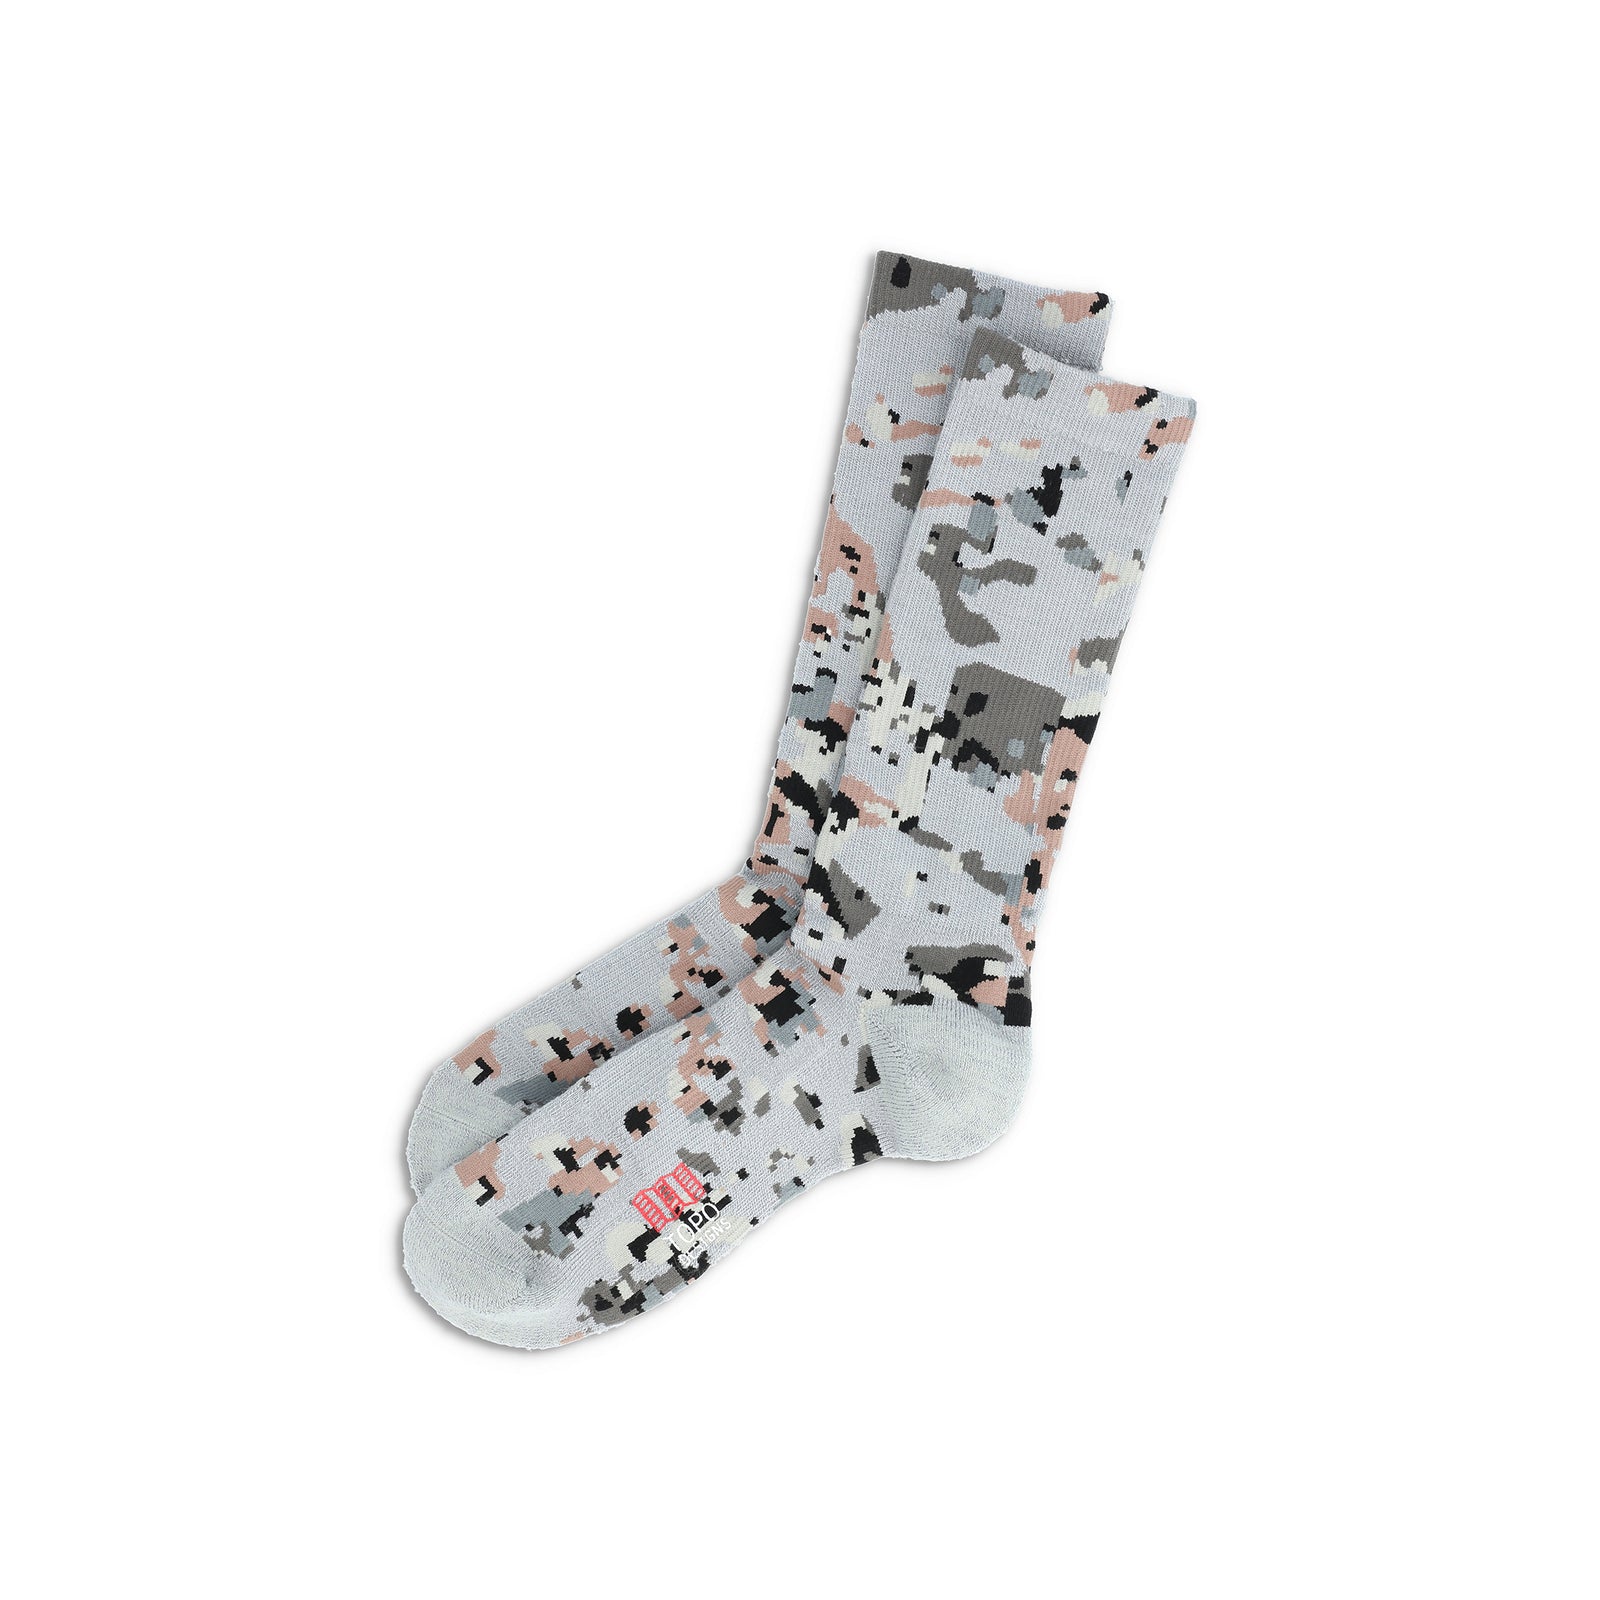 Front View of Topo Designs Town Socks in "Slate Nebula"